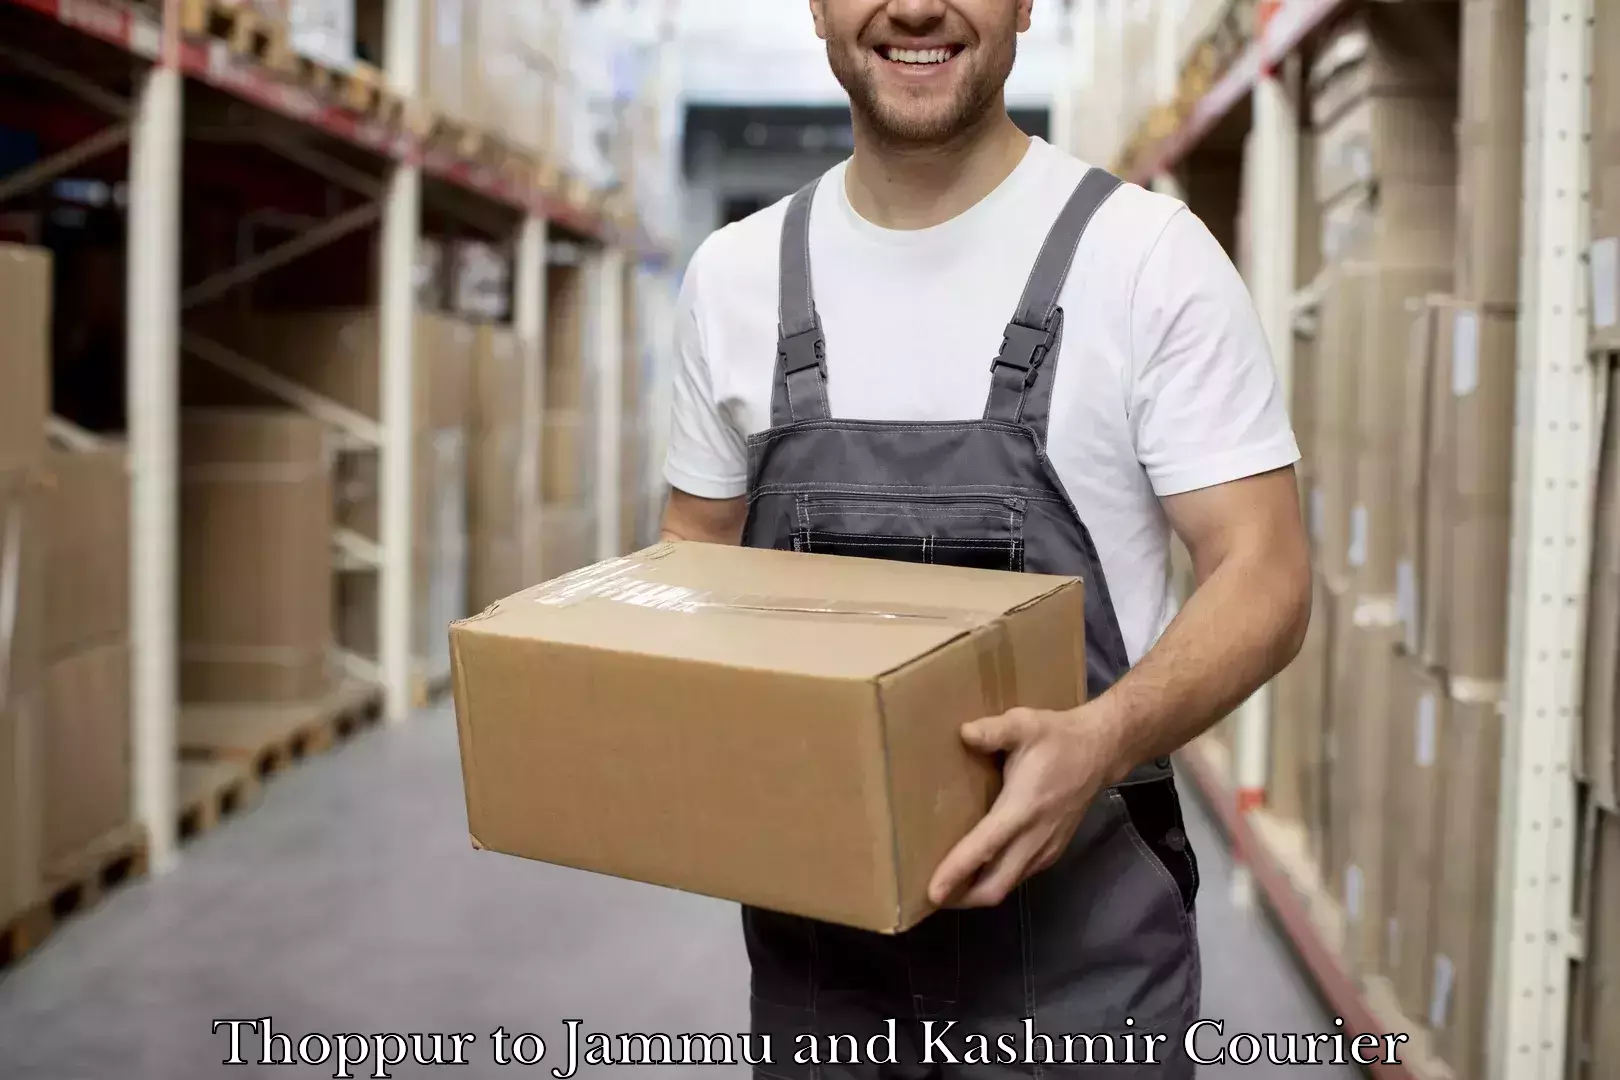 Luggage delivery app Thoppur to Kishtwar